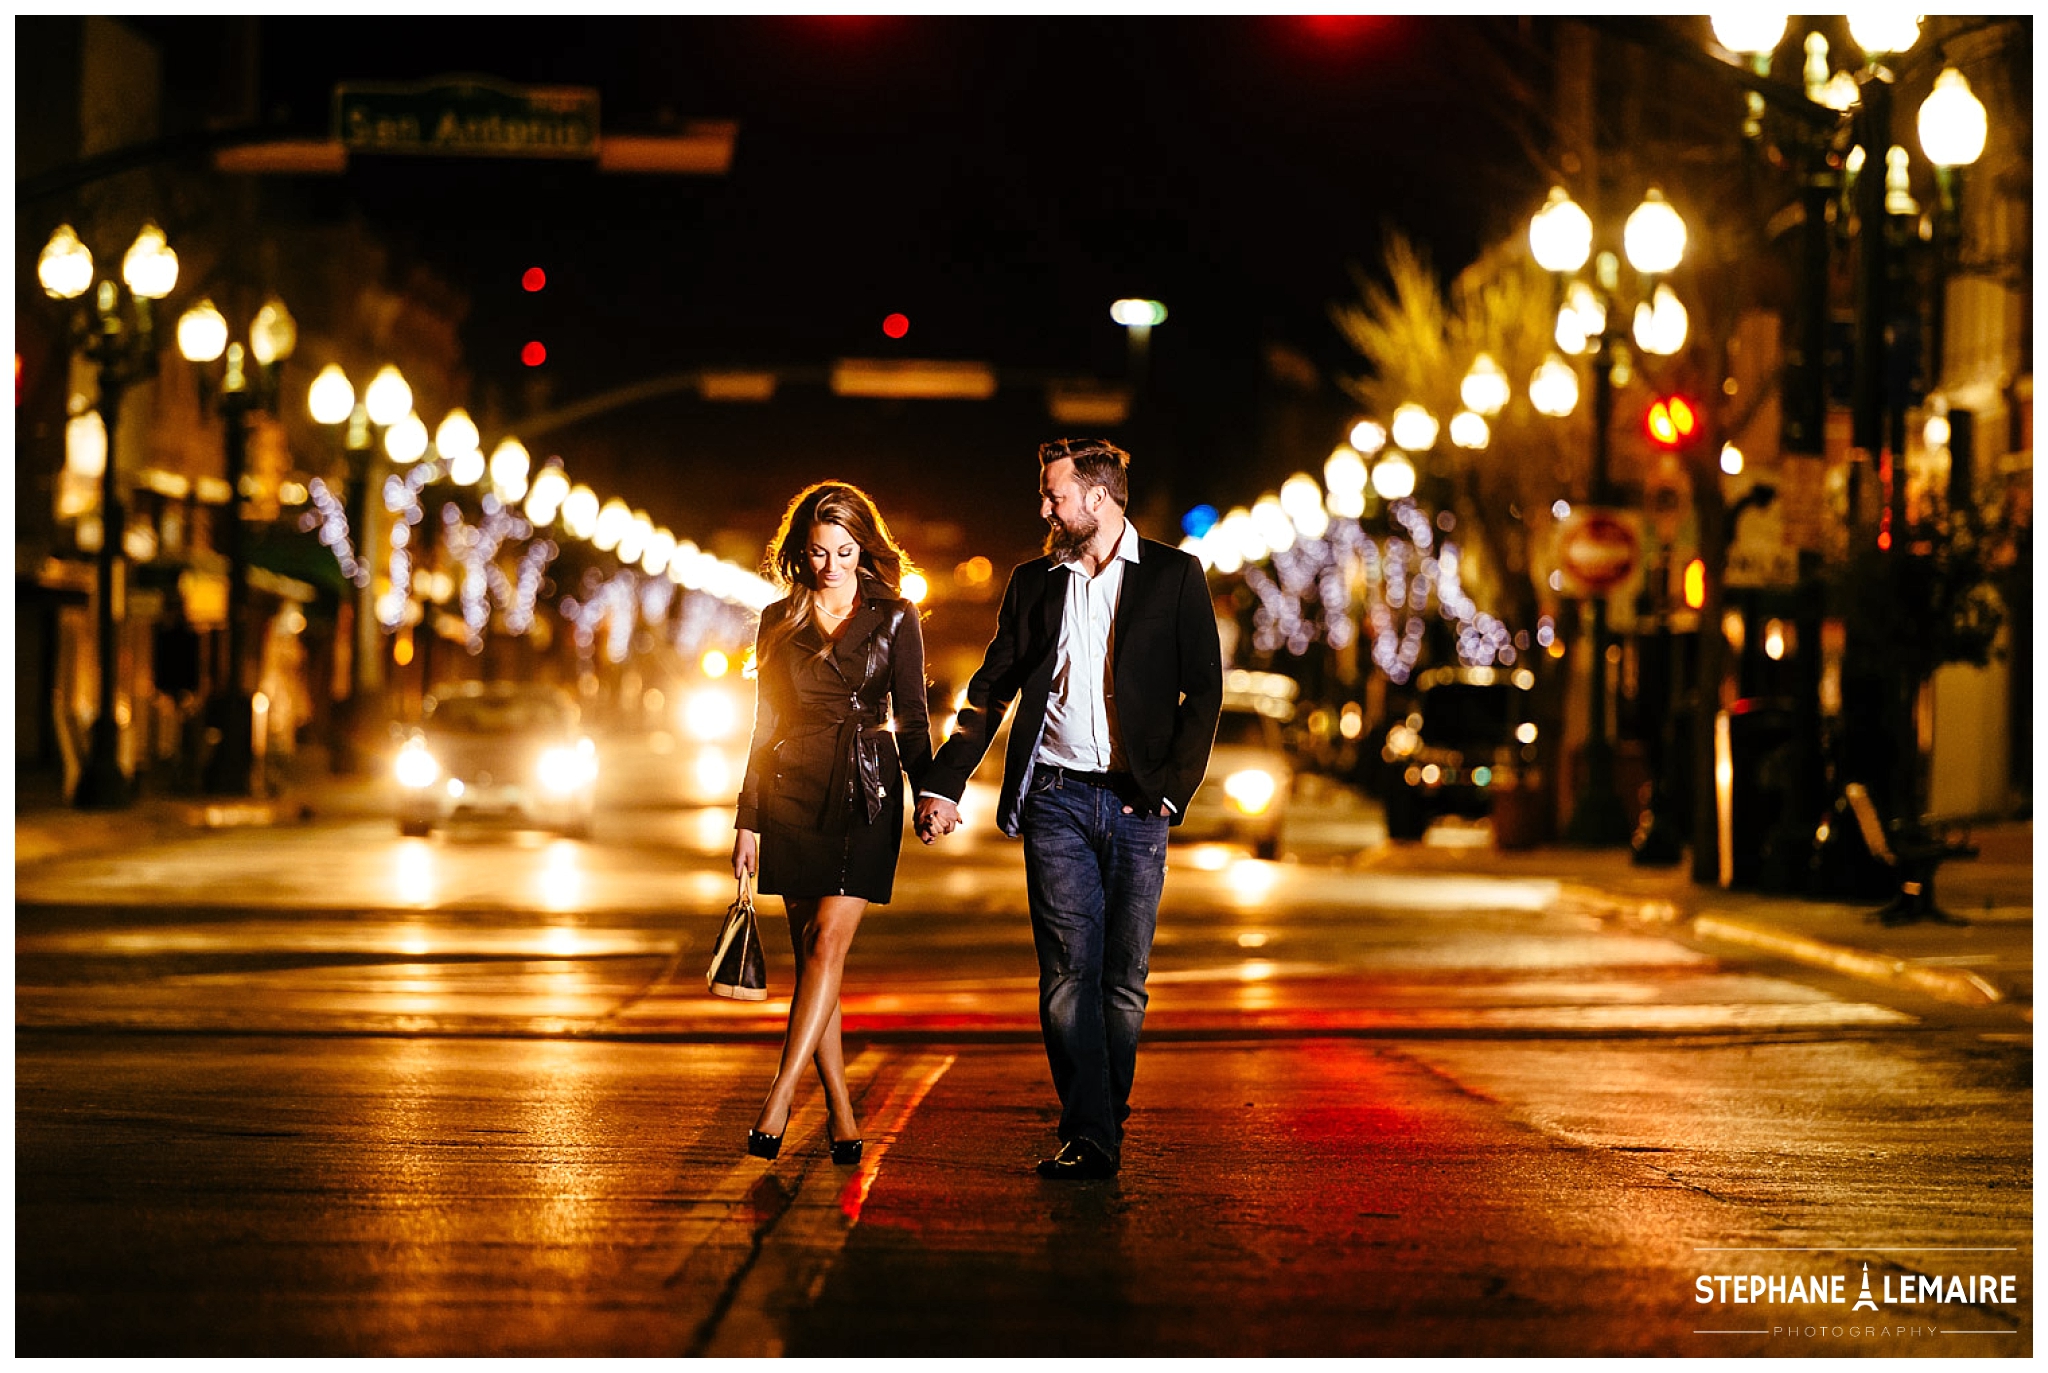 Couple walking at night downtown el paso